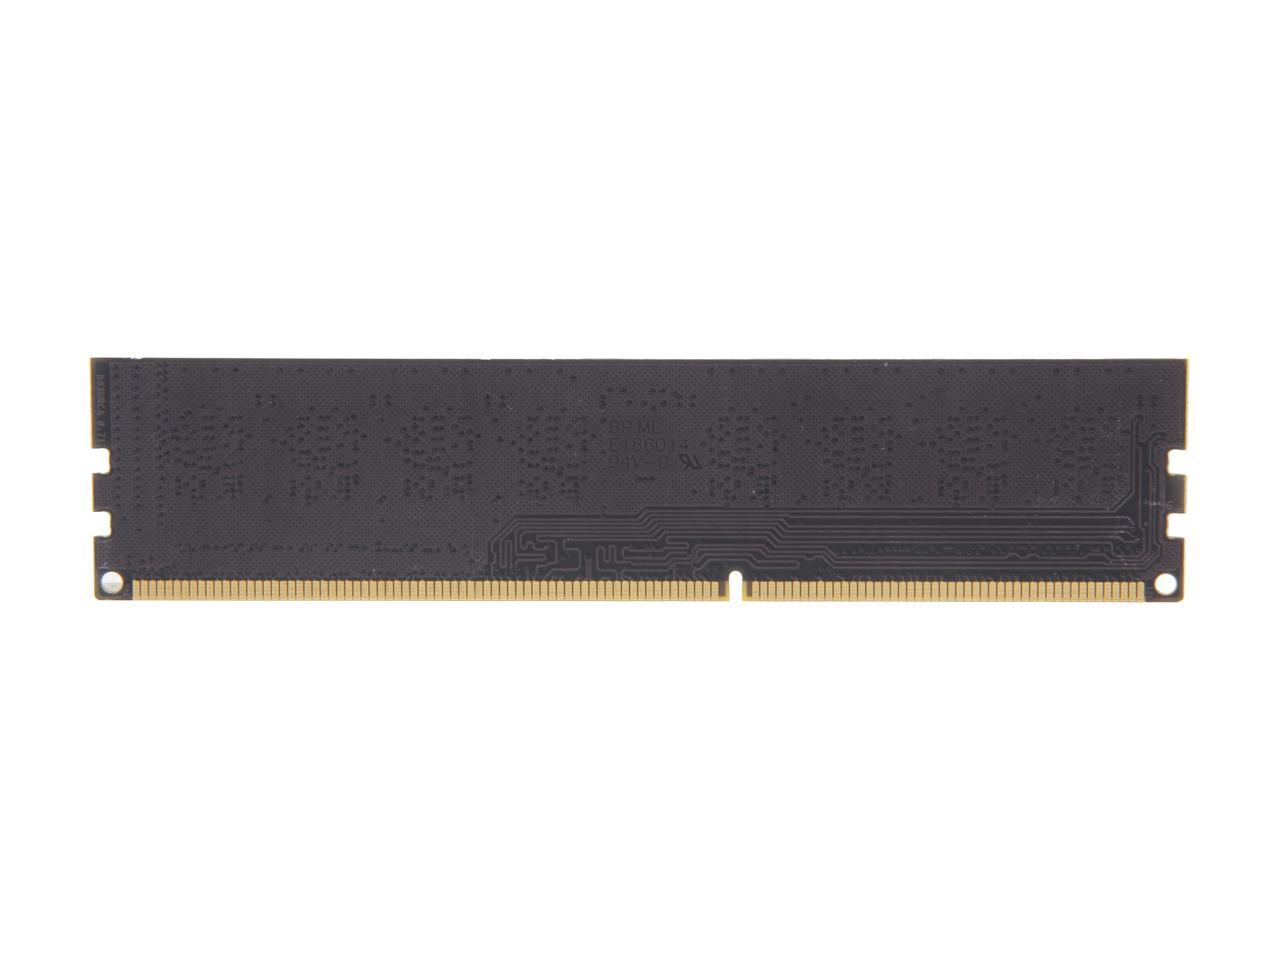 G.SKILL NS Series 4GB 240-Pin DDR3 SDRAM DDR3 1333 (PC3 10600) Desktop Memory Model F3-1333C9S-4GNS